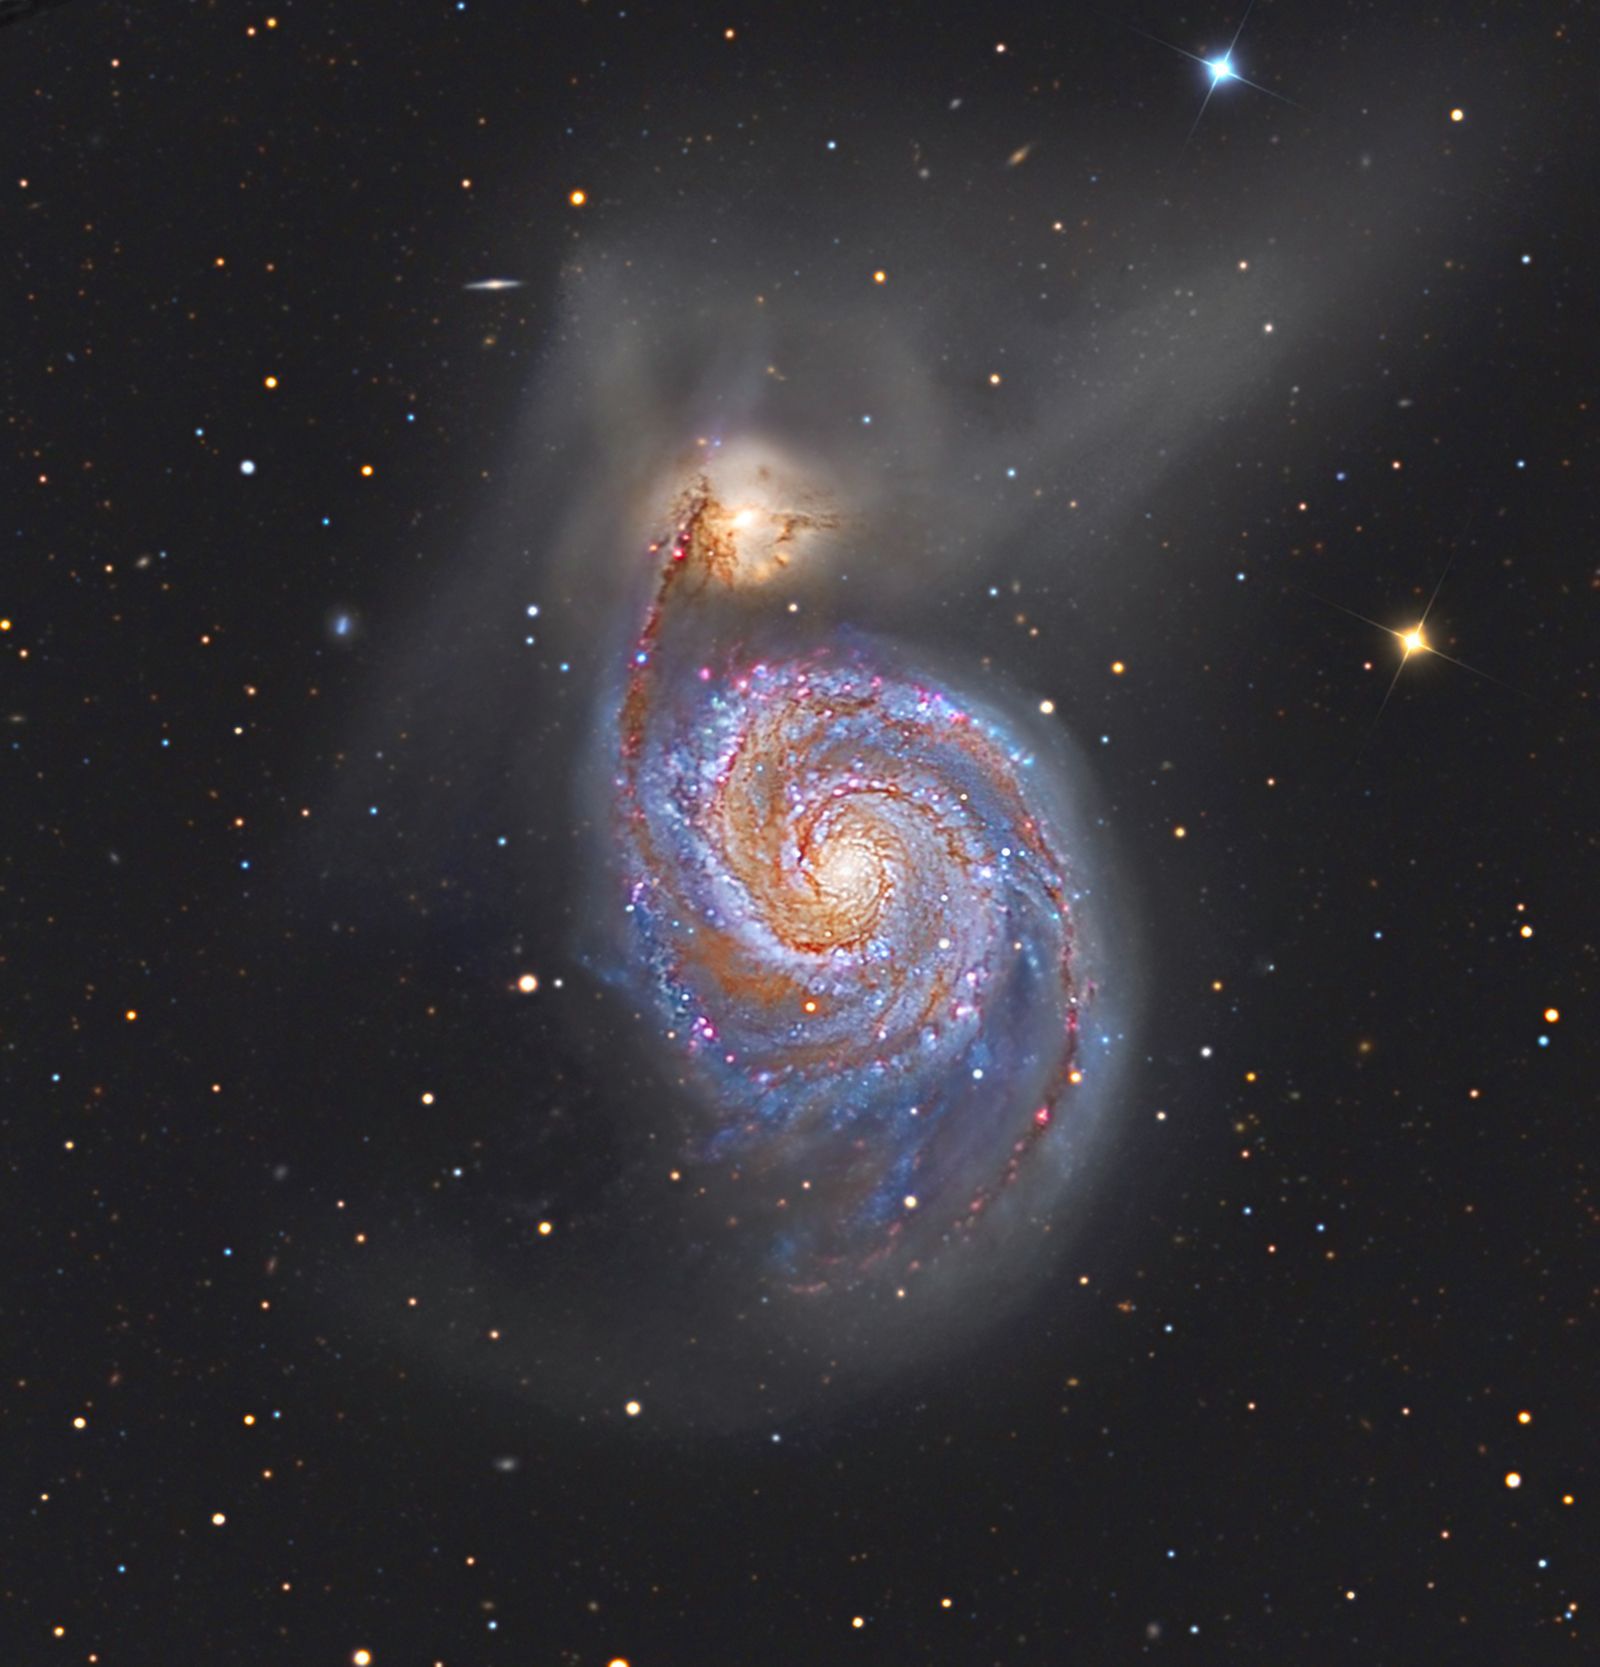 M51 Whirlpool Galaxy. About 31 million light years away. Whirlpool galaxy, Galaxy image, Spiral galaxy